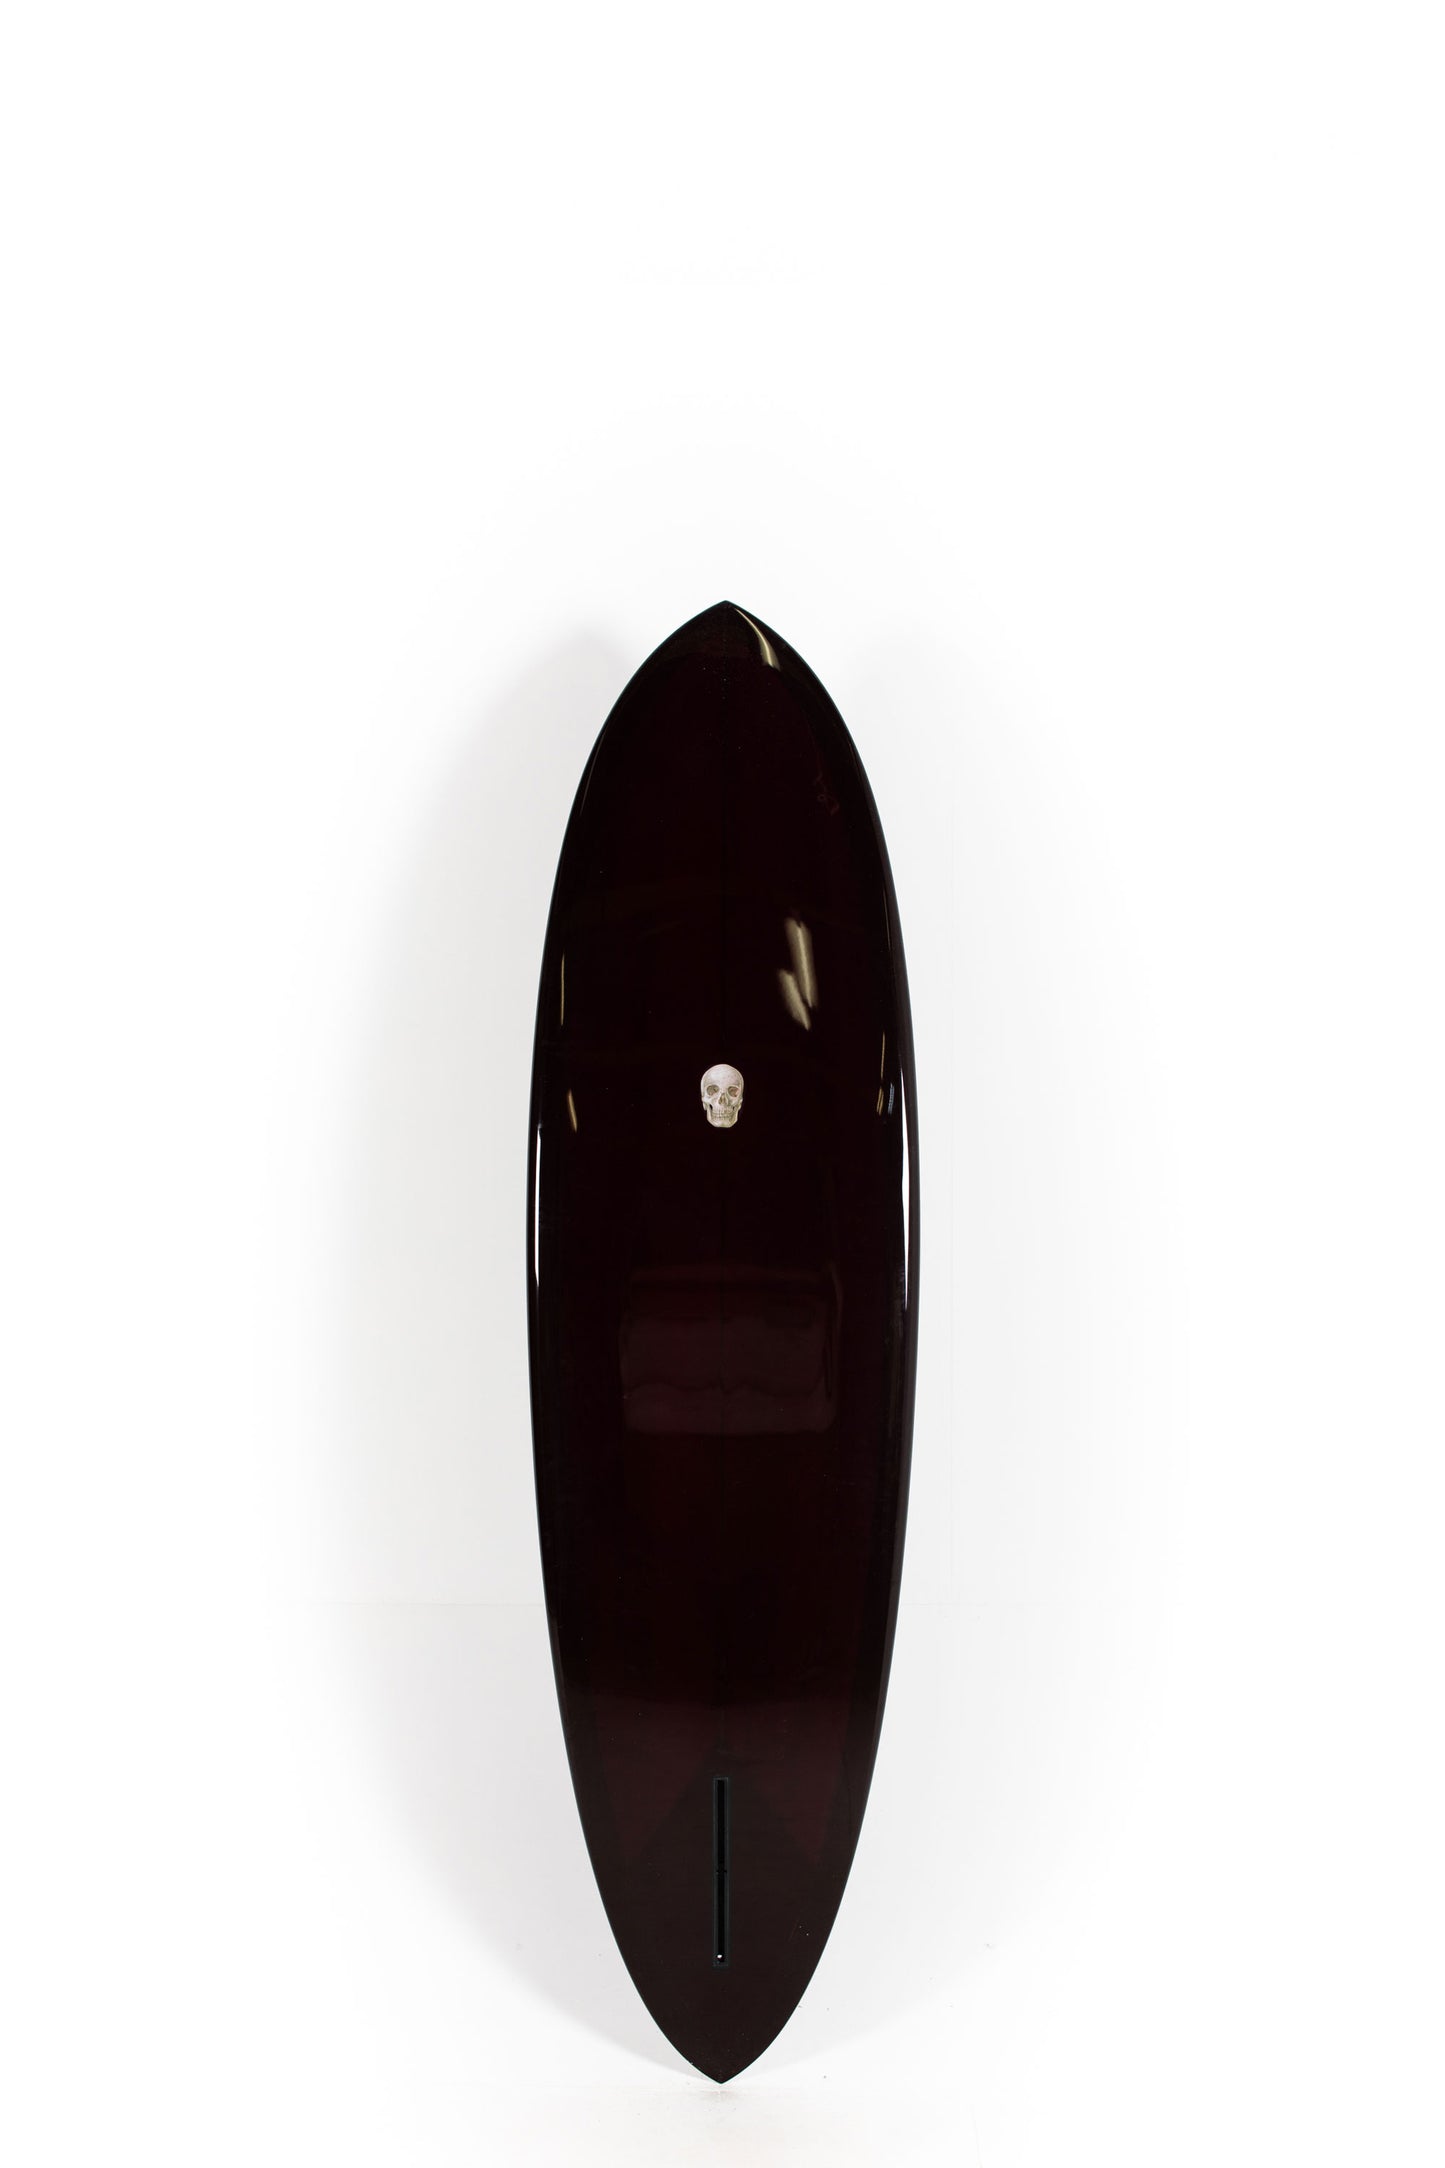 Pukas Surf Shop - Christenson Surfboards - C-BUCKET - 6'8" x 21 x 2 11/16 - CX05012